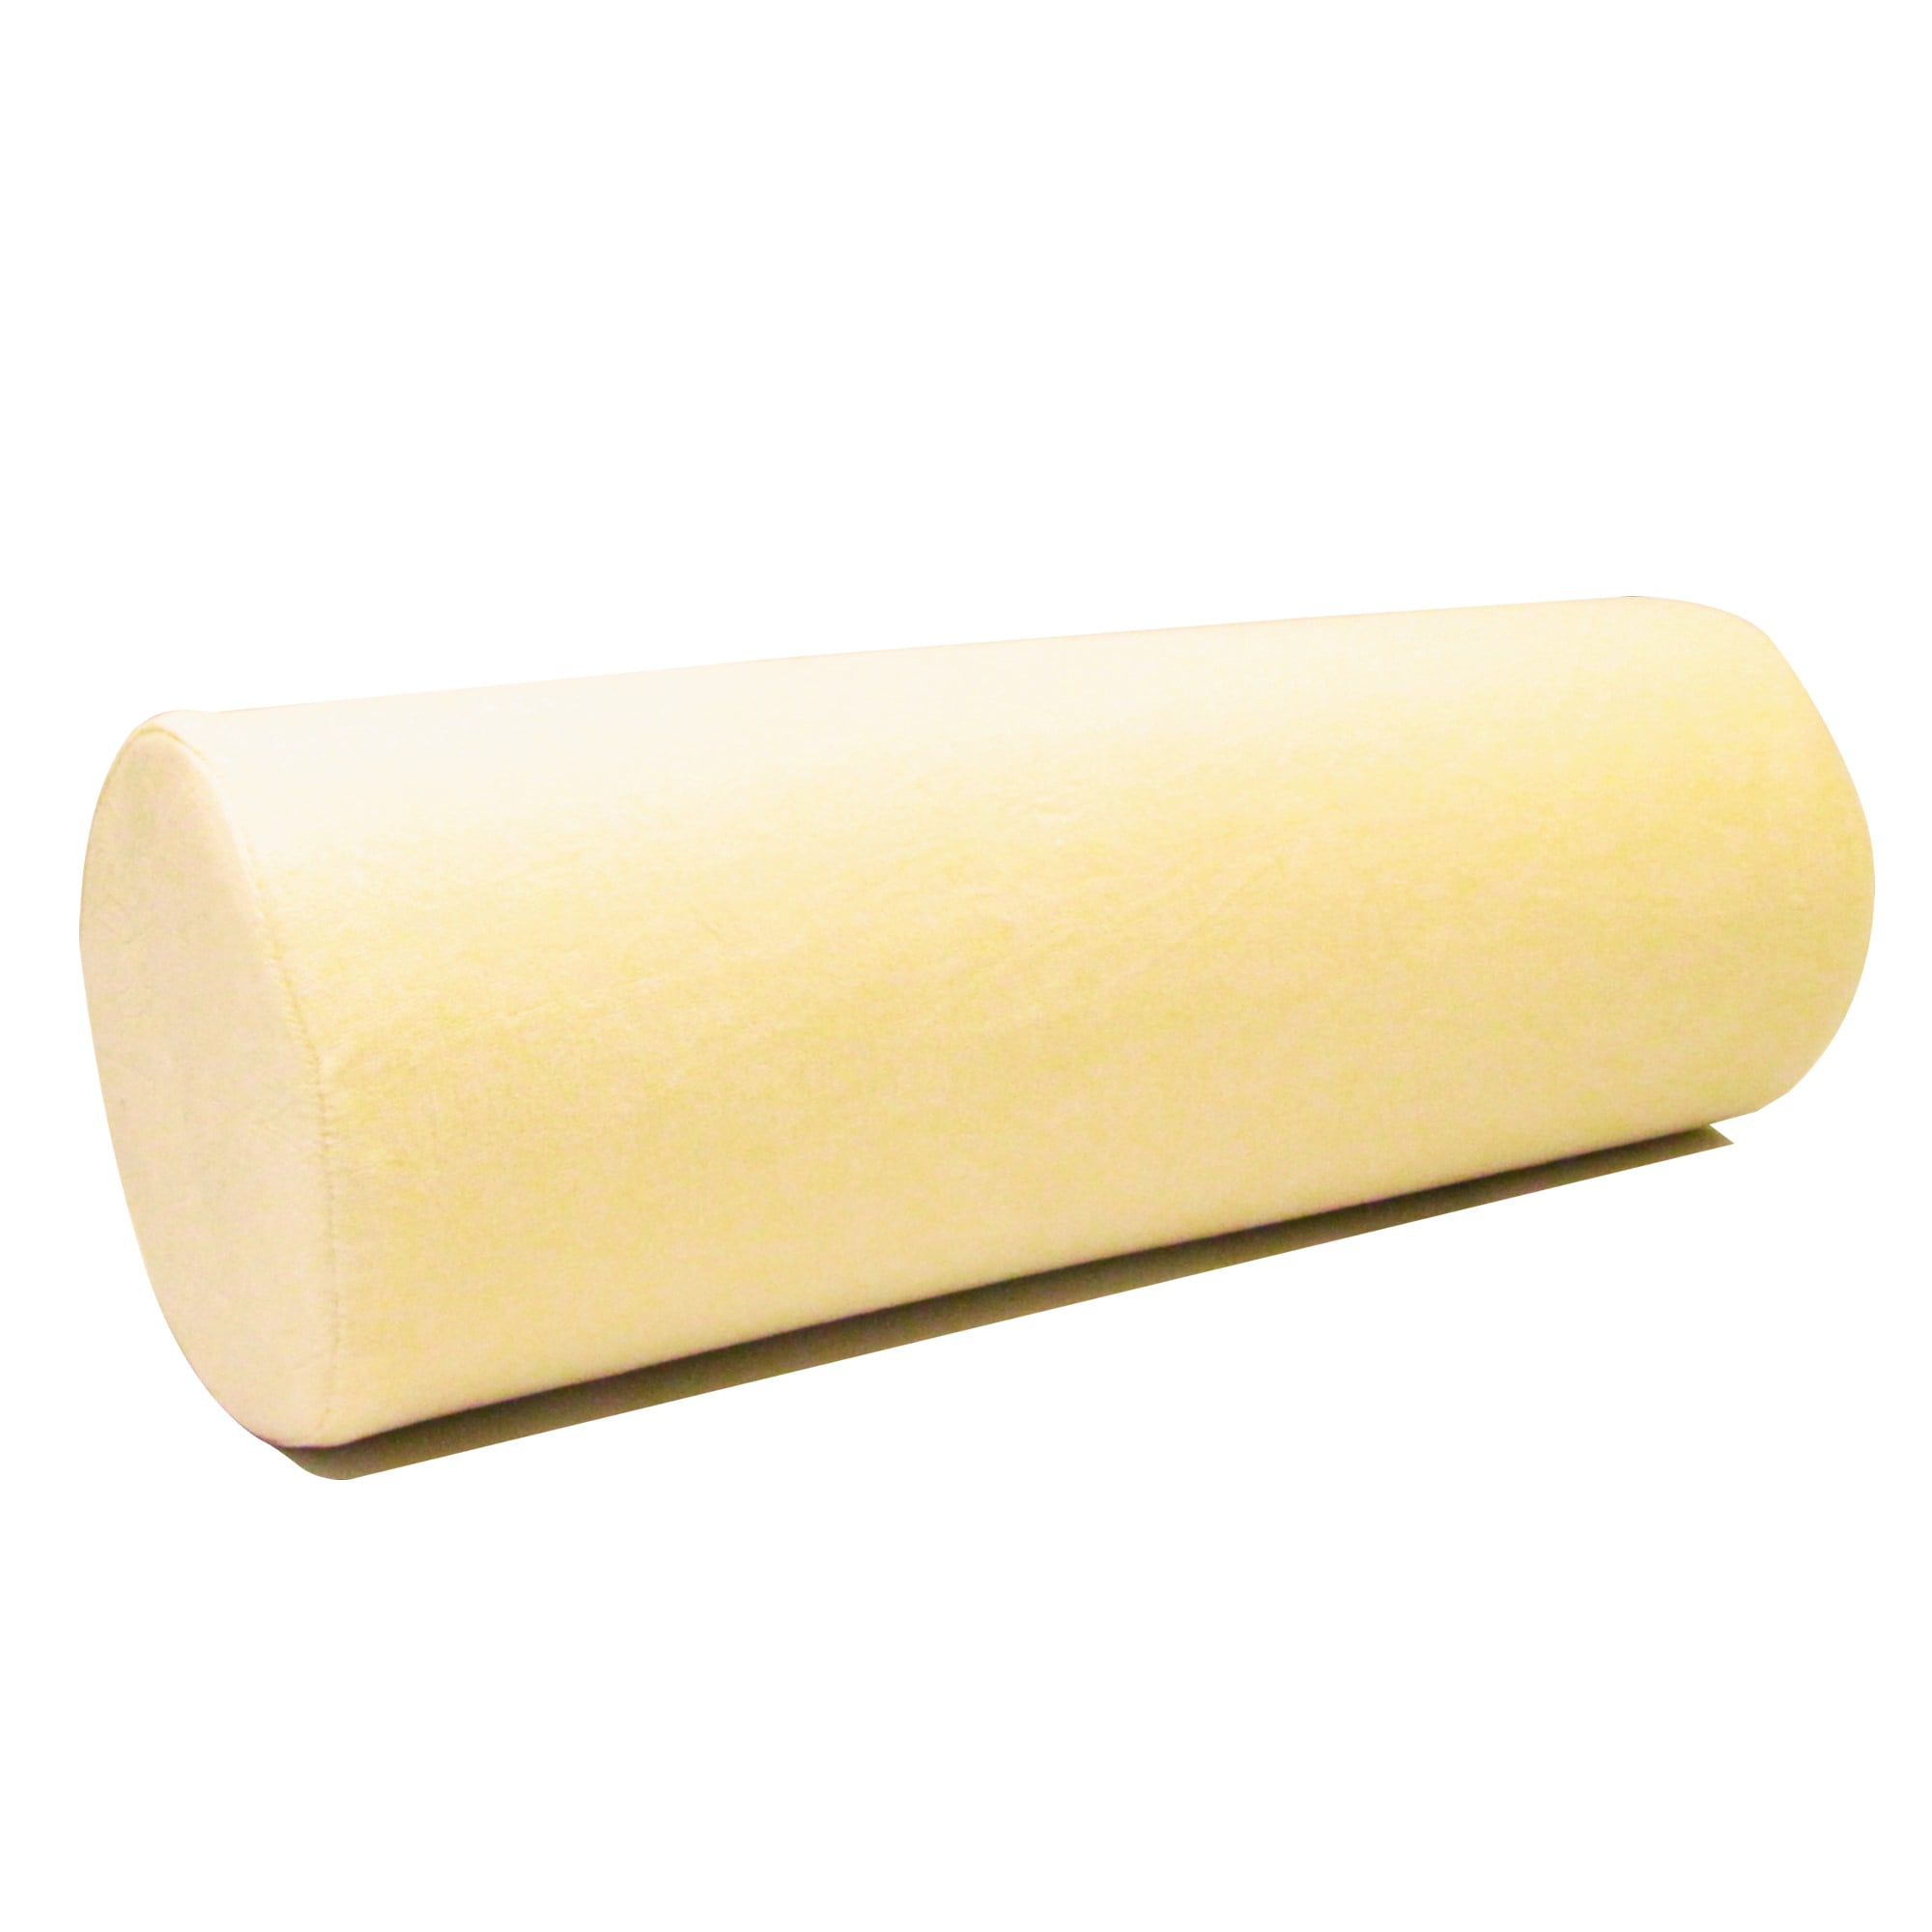 round foam pillow